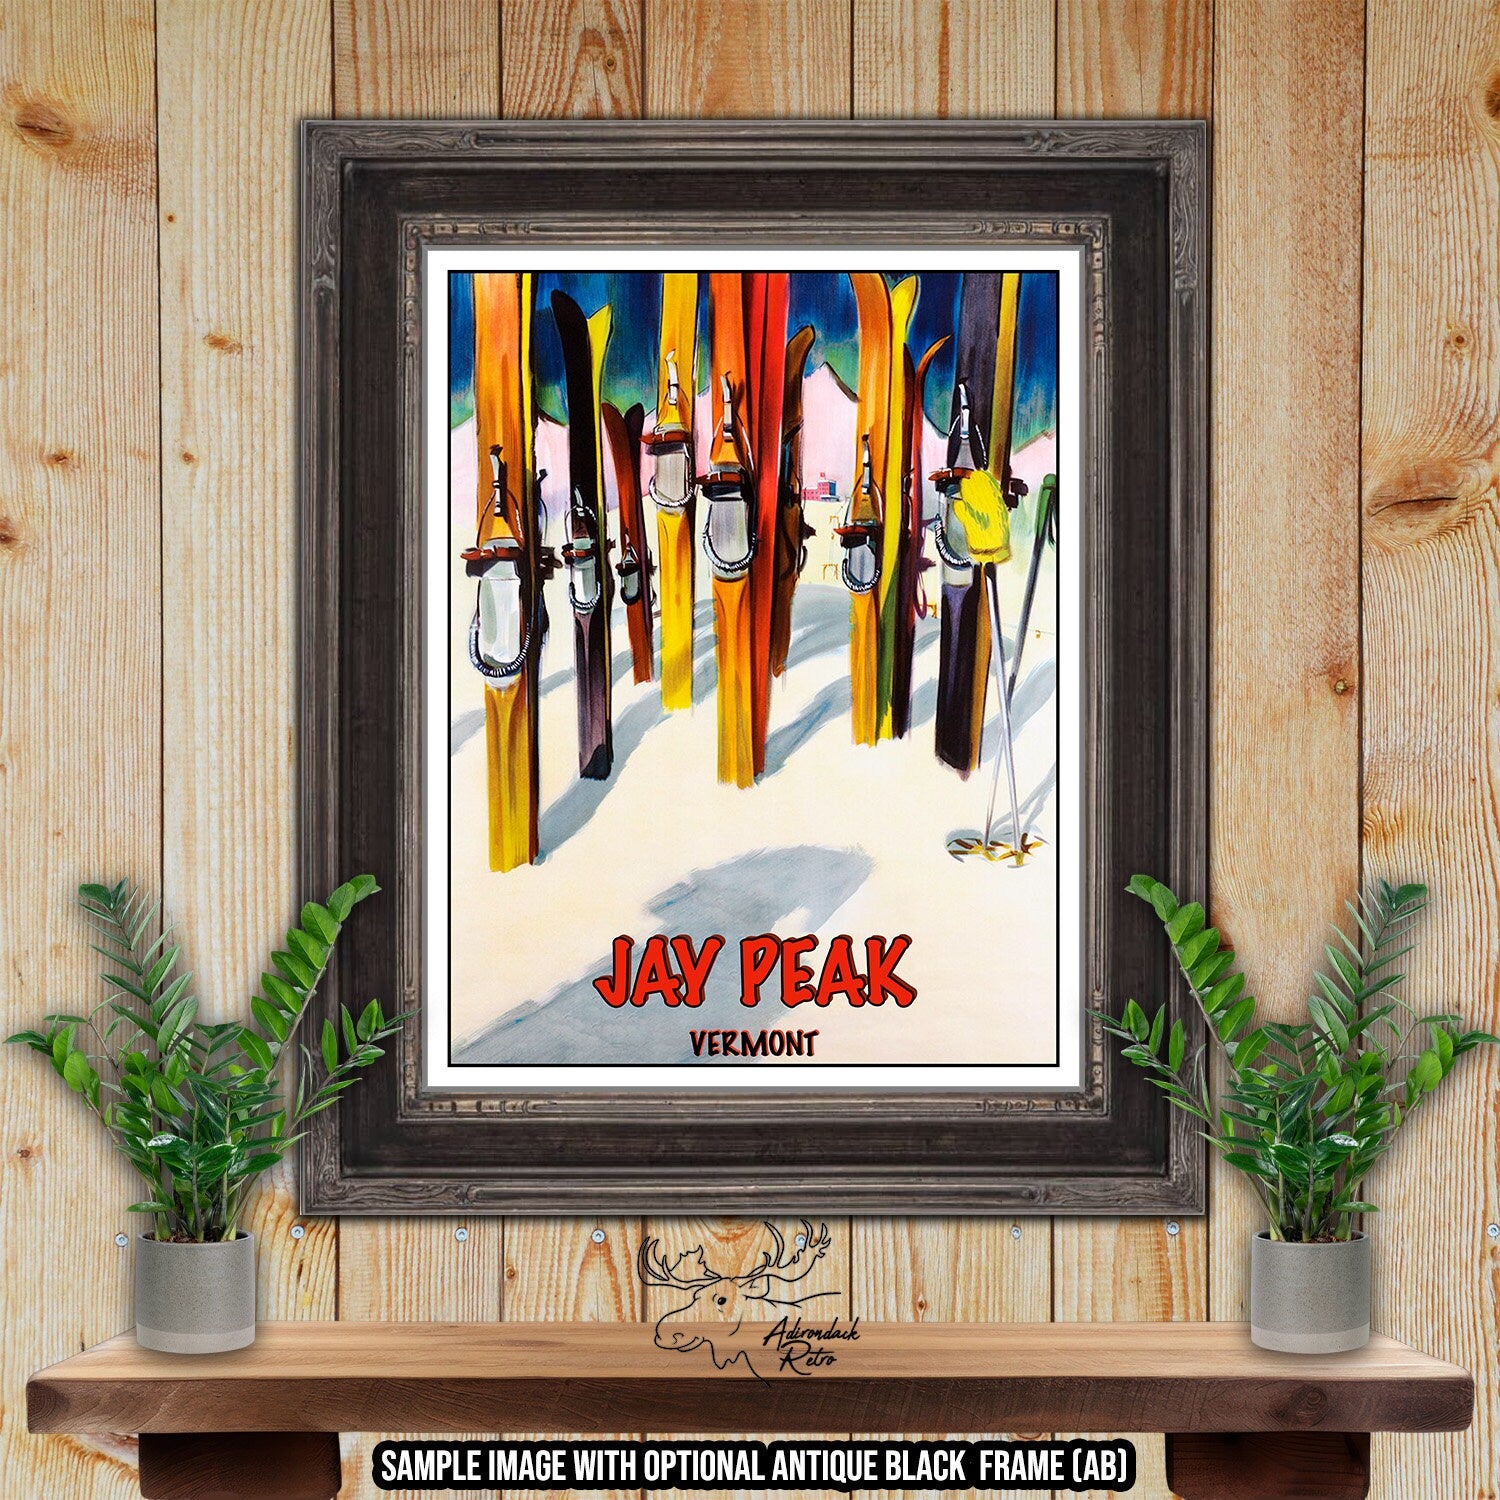 Jay Peak Vermont Retro Ski Resort Poster at Adirondack Retro